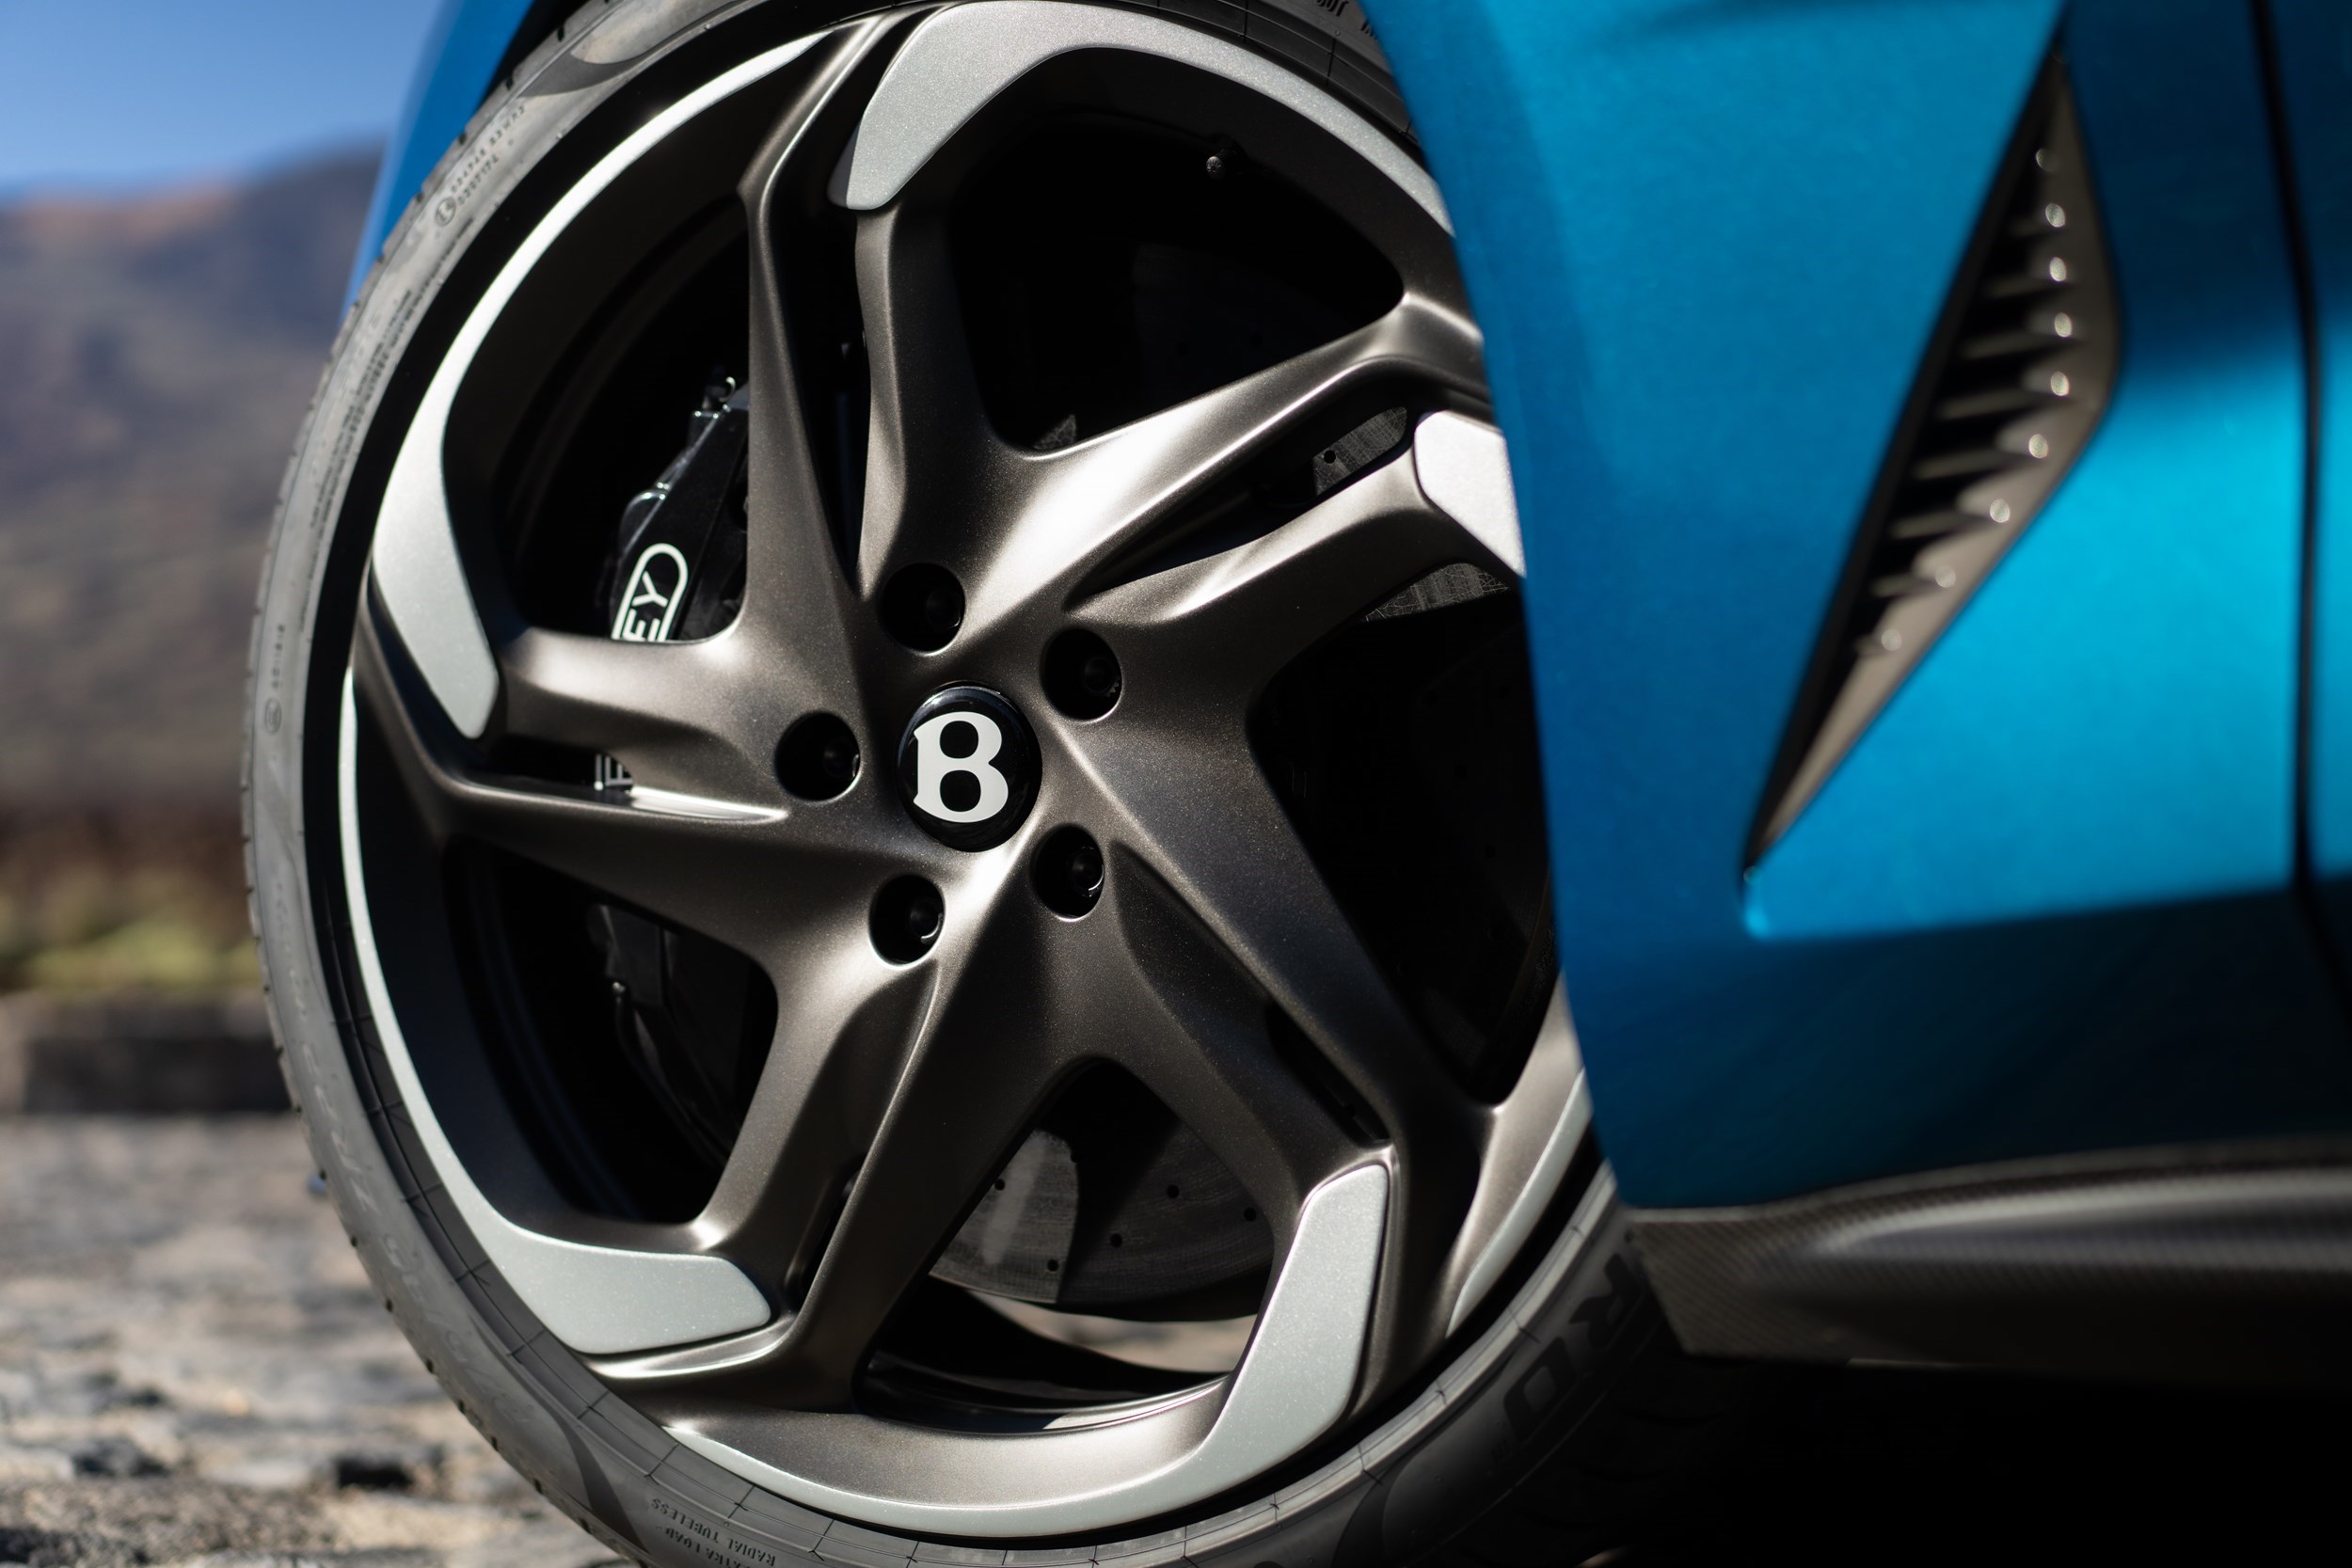 Colour , Blue Image type , Detail Angle , Wheel General , Bentley Mulliner Current Models , Bacalar , Bacalar 